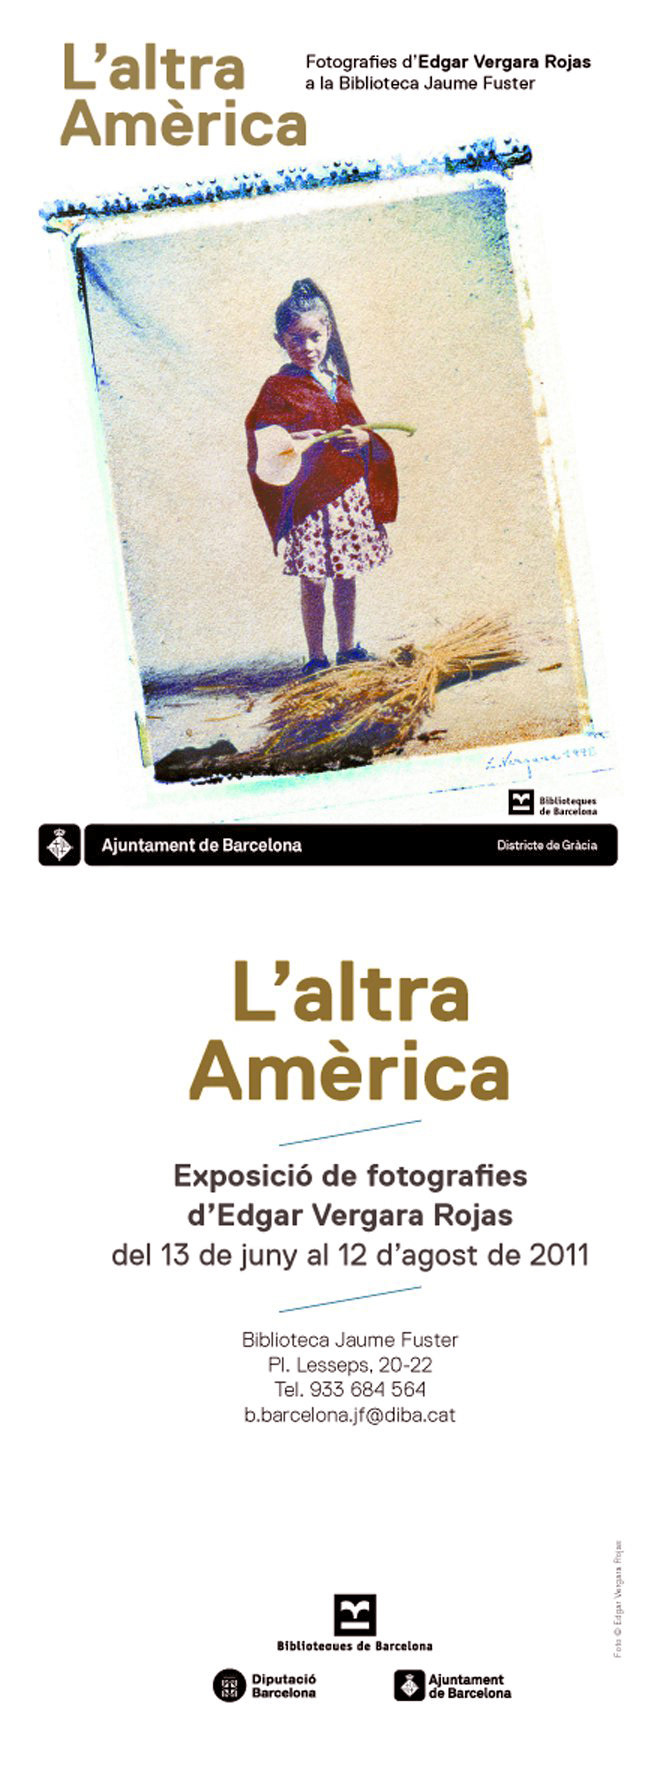 portraits Venezuelan Andes peasants South America Andes polaroid transfers